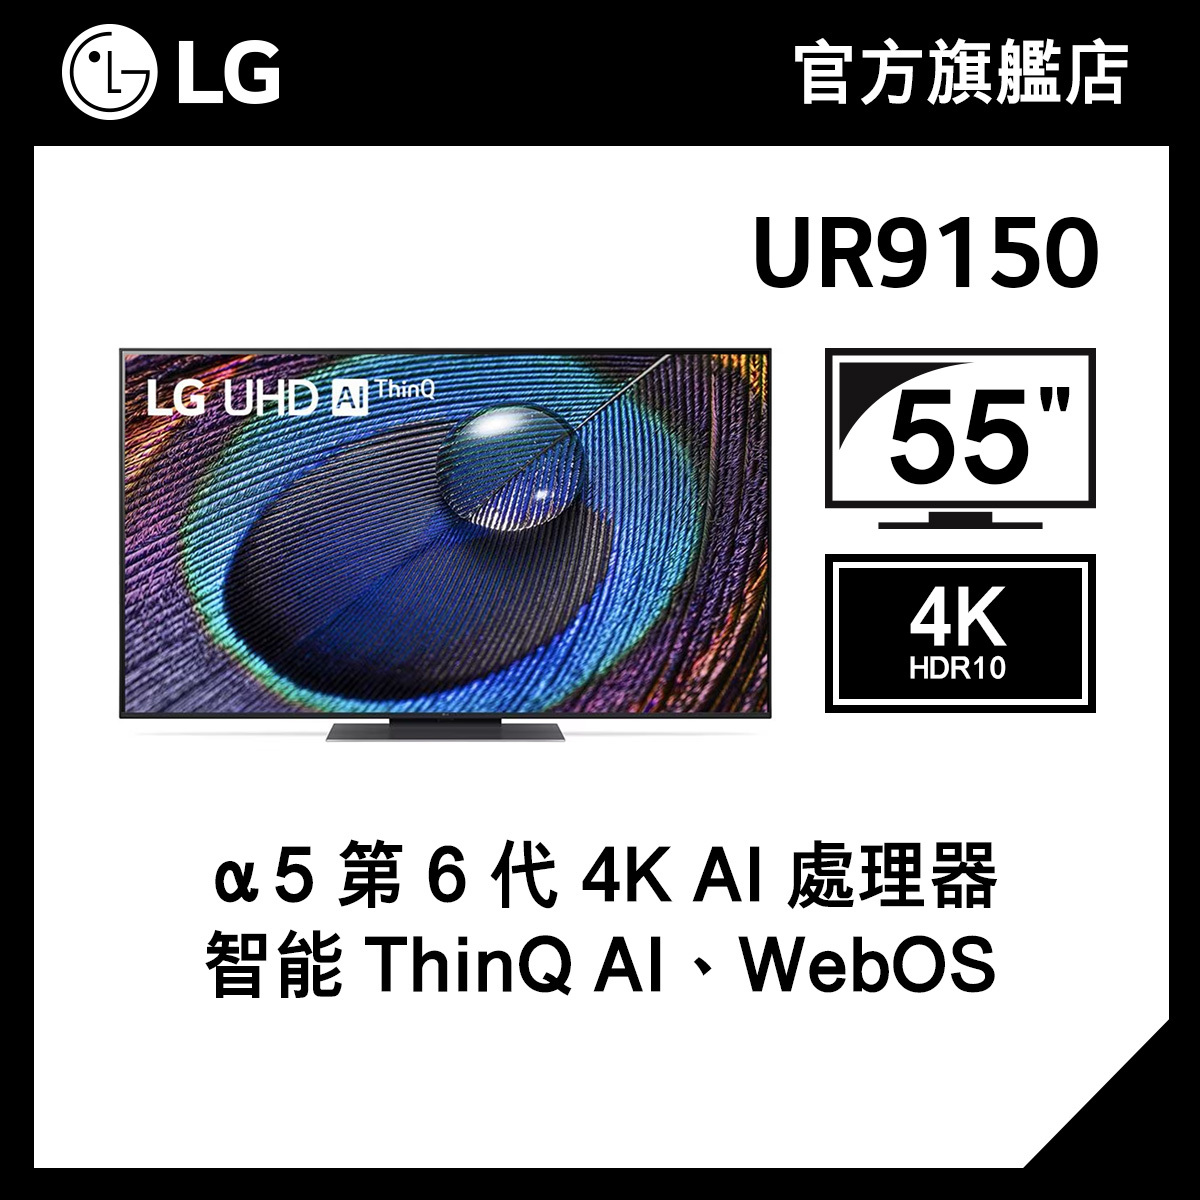 LG 55" UHD 4K 智能電視 UR9150